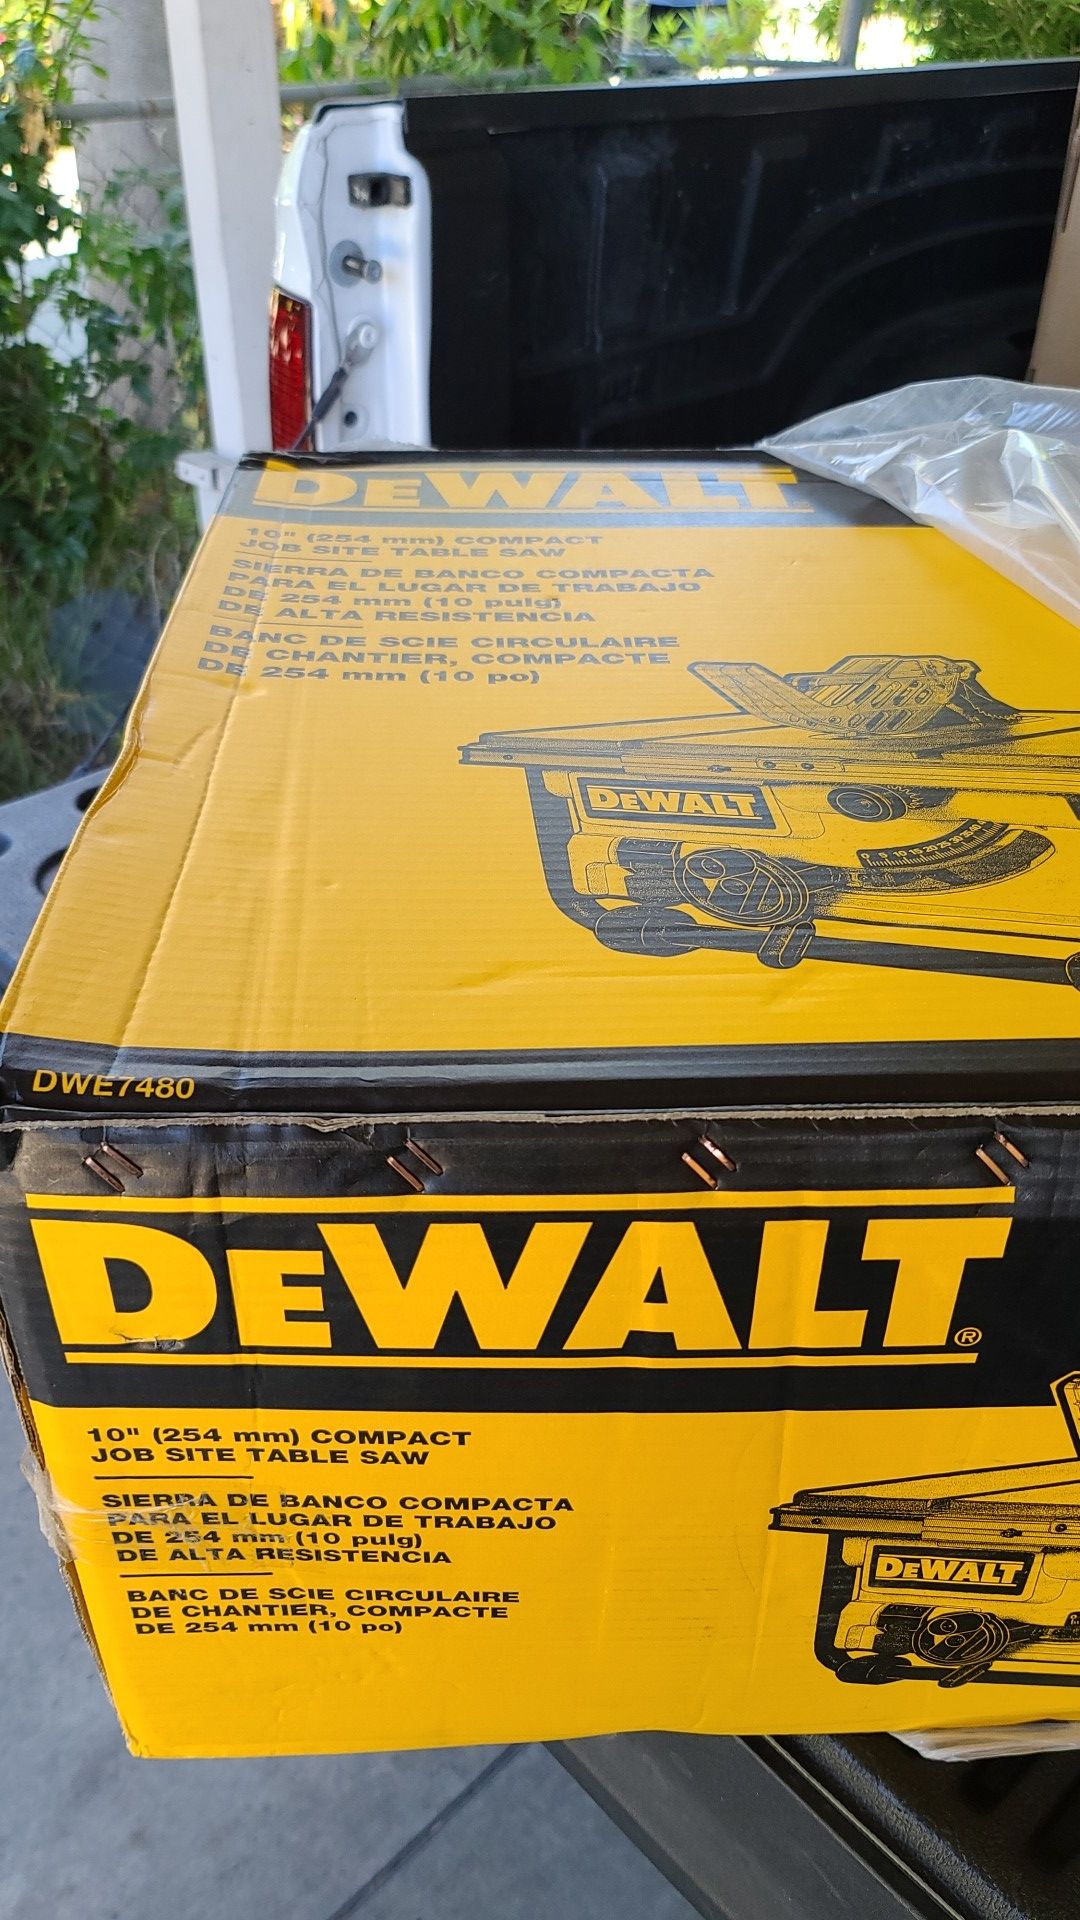 Dewalt dwe7480 brand new table saw